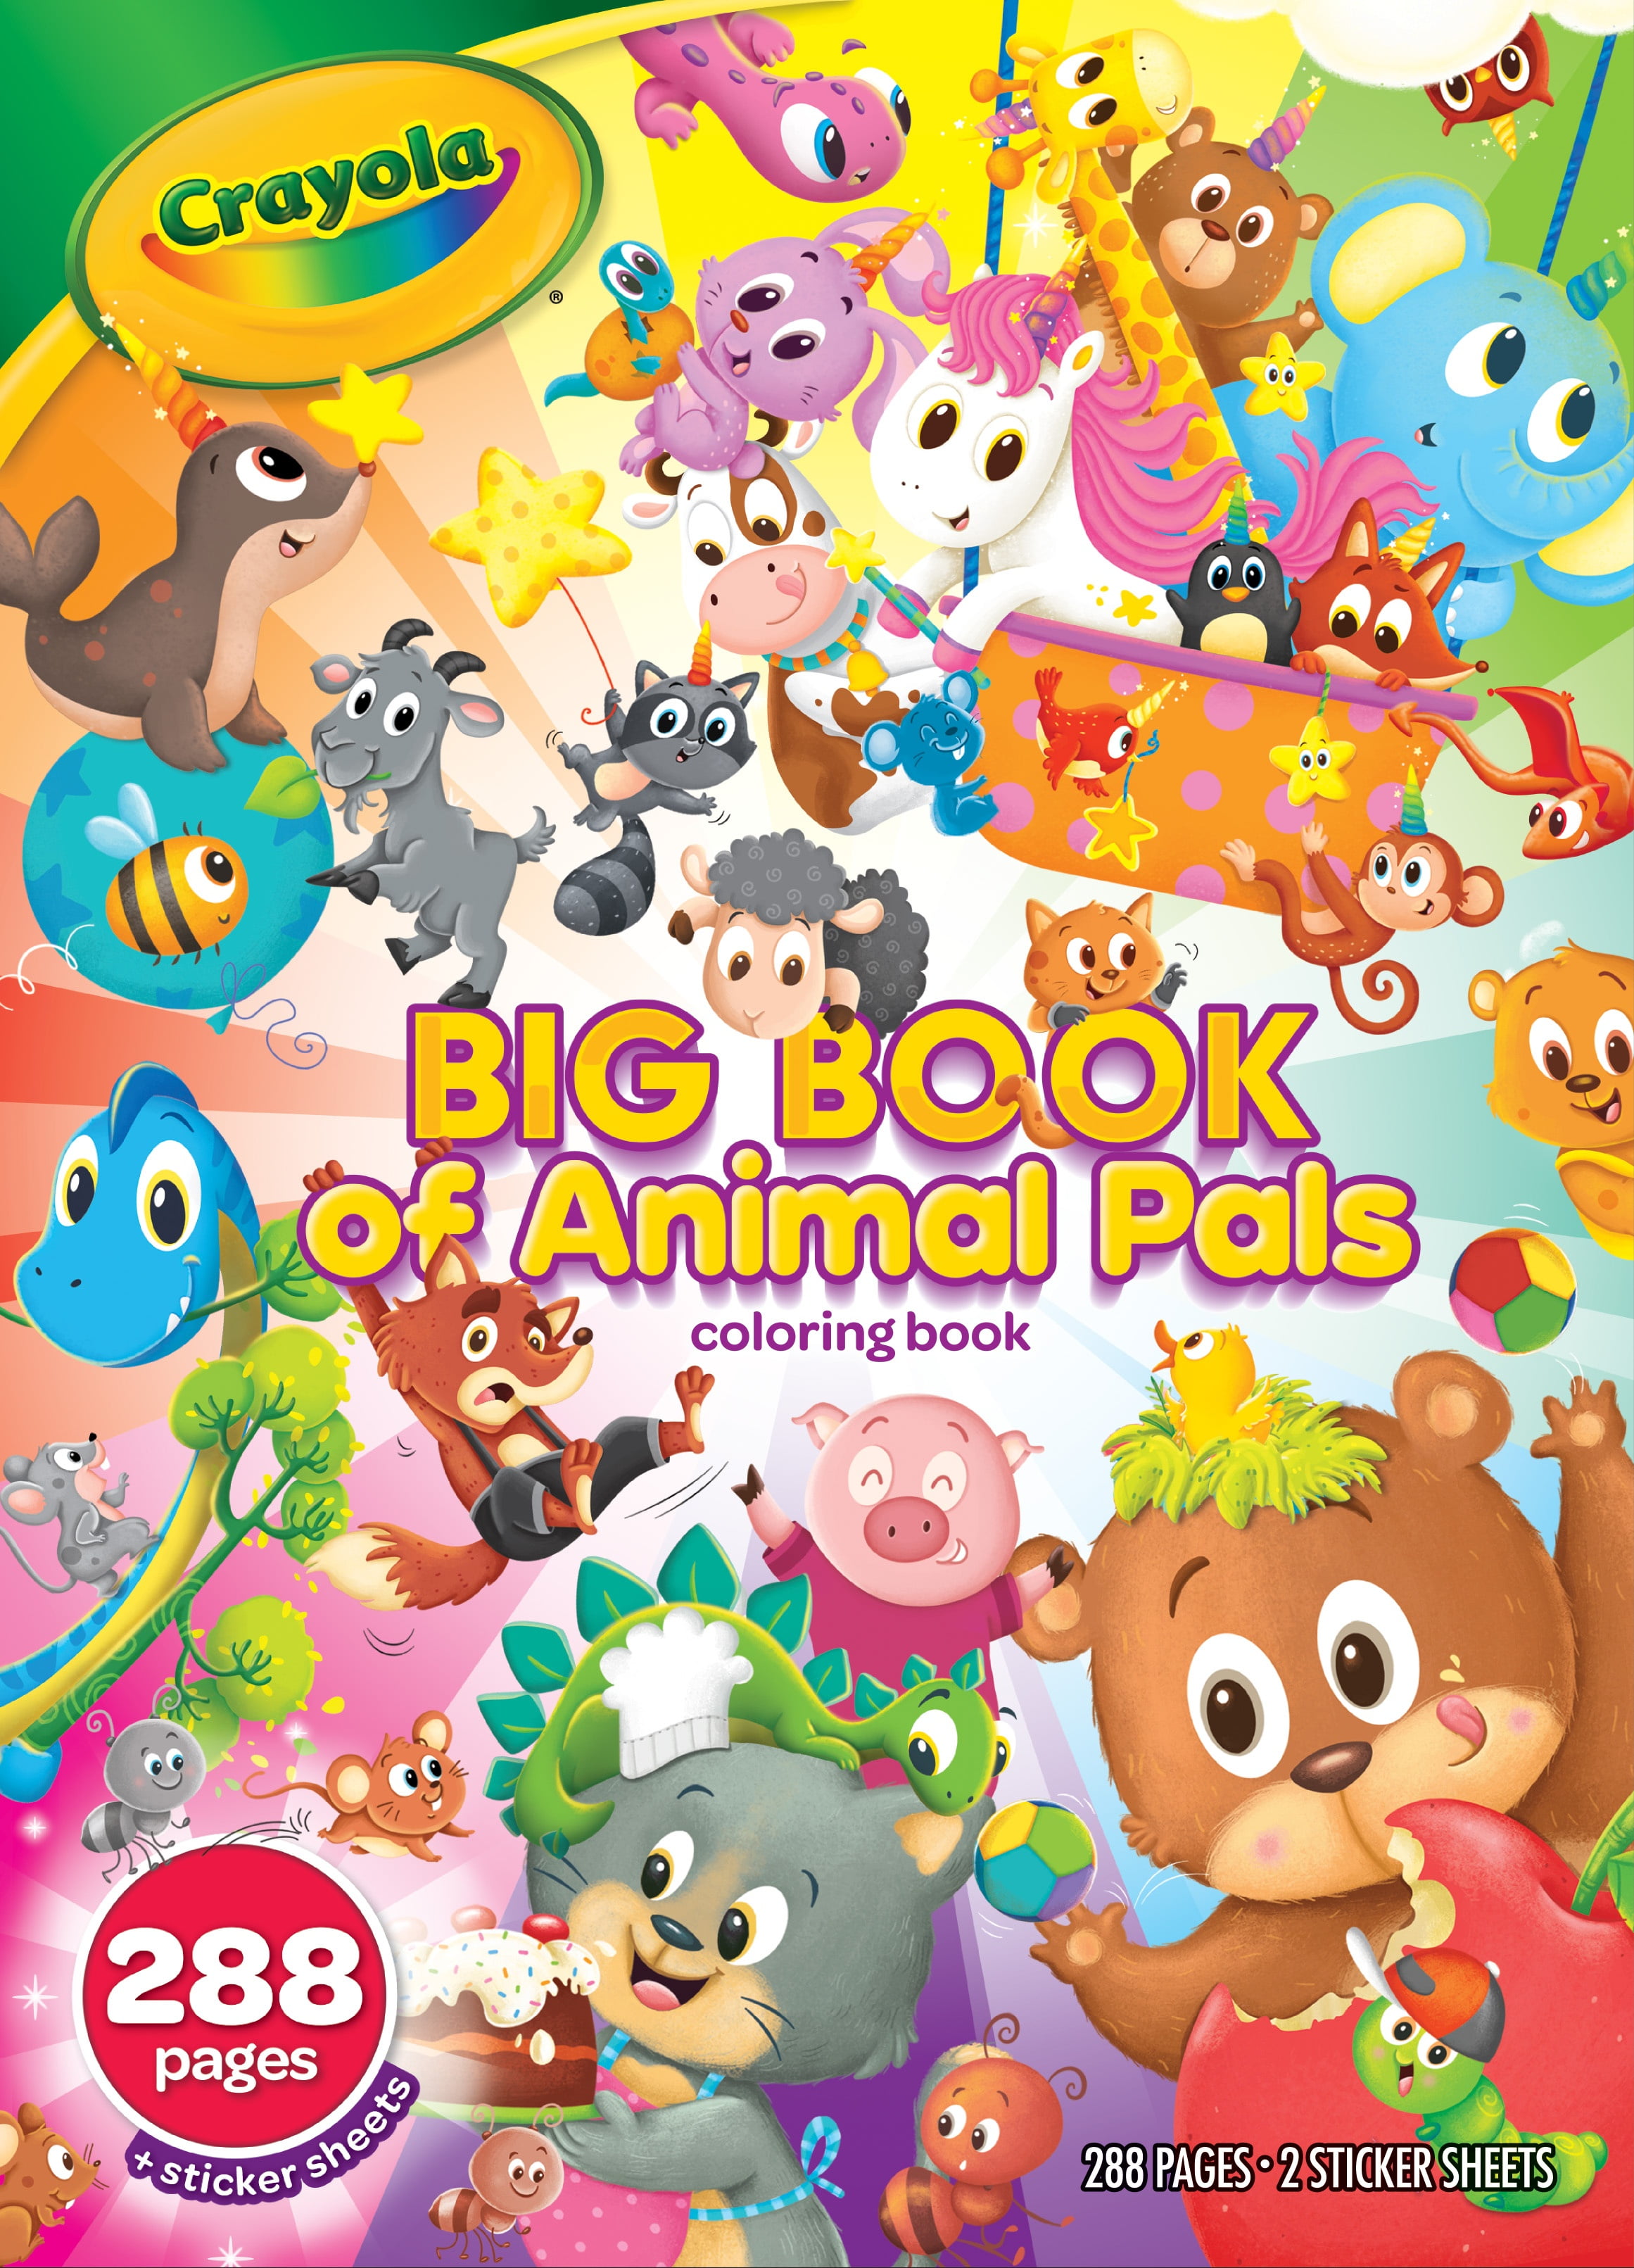 Jungle Animal Coloring Book, Adult Coloring, Crayola.com